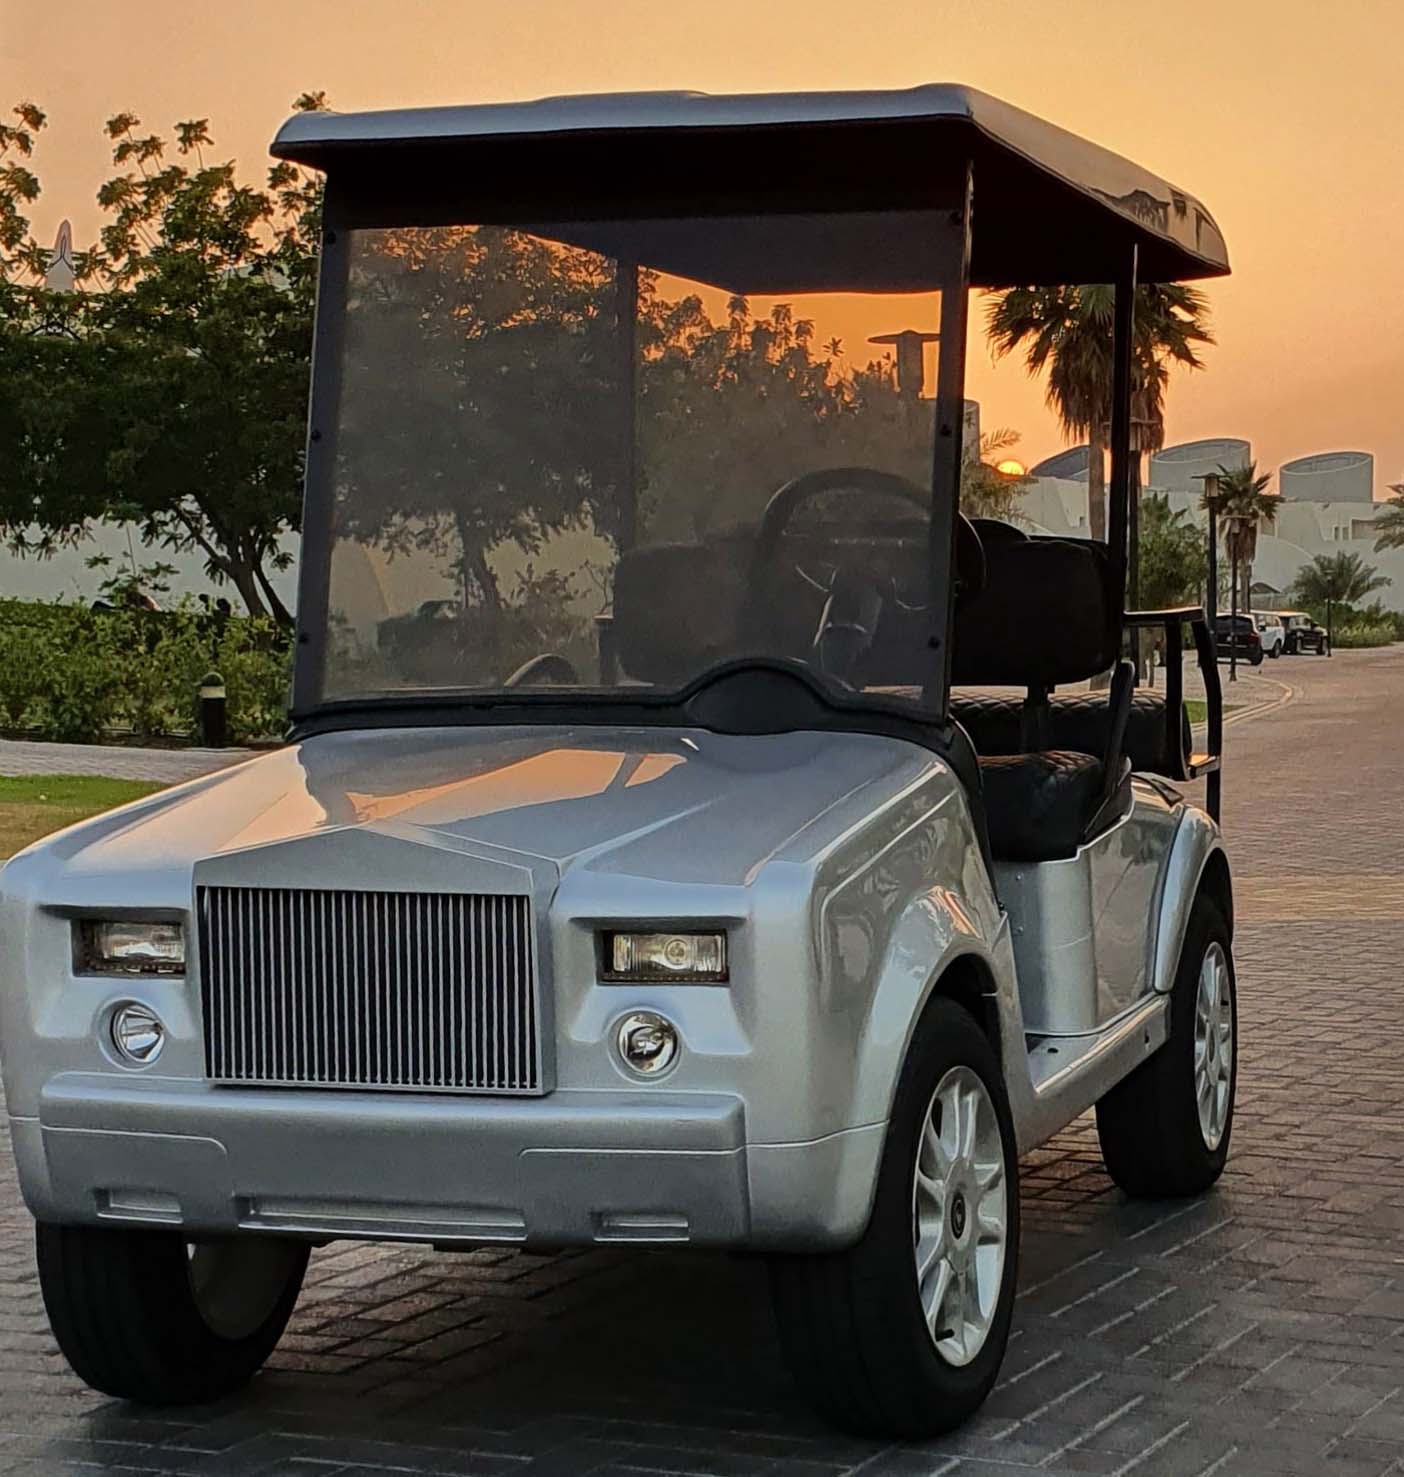 Refabricated Rolls Royce golf cart